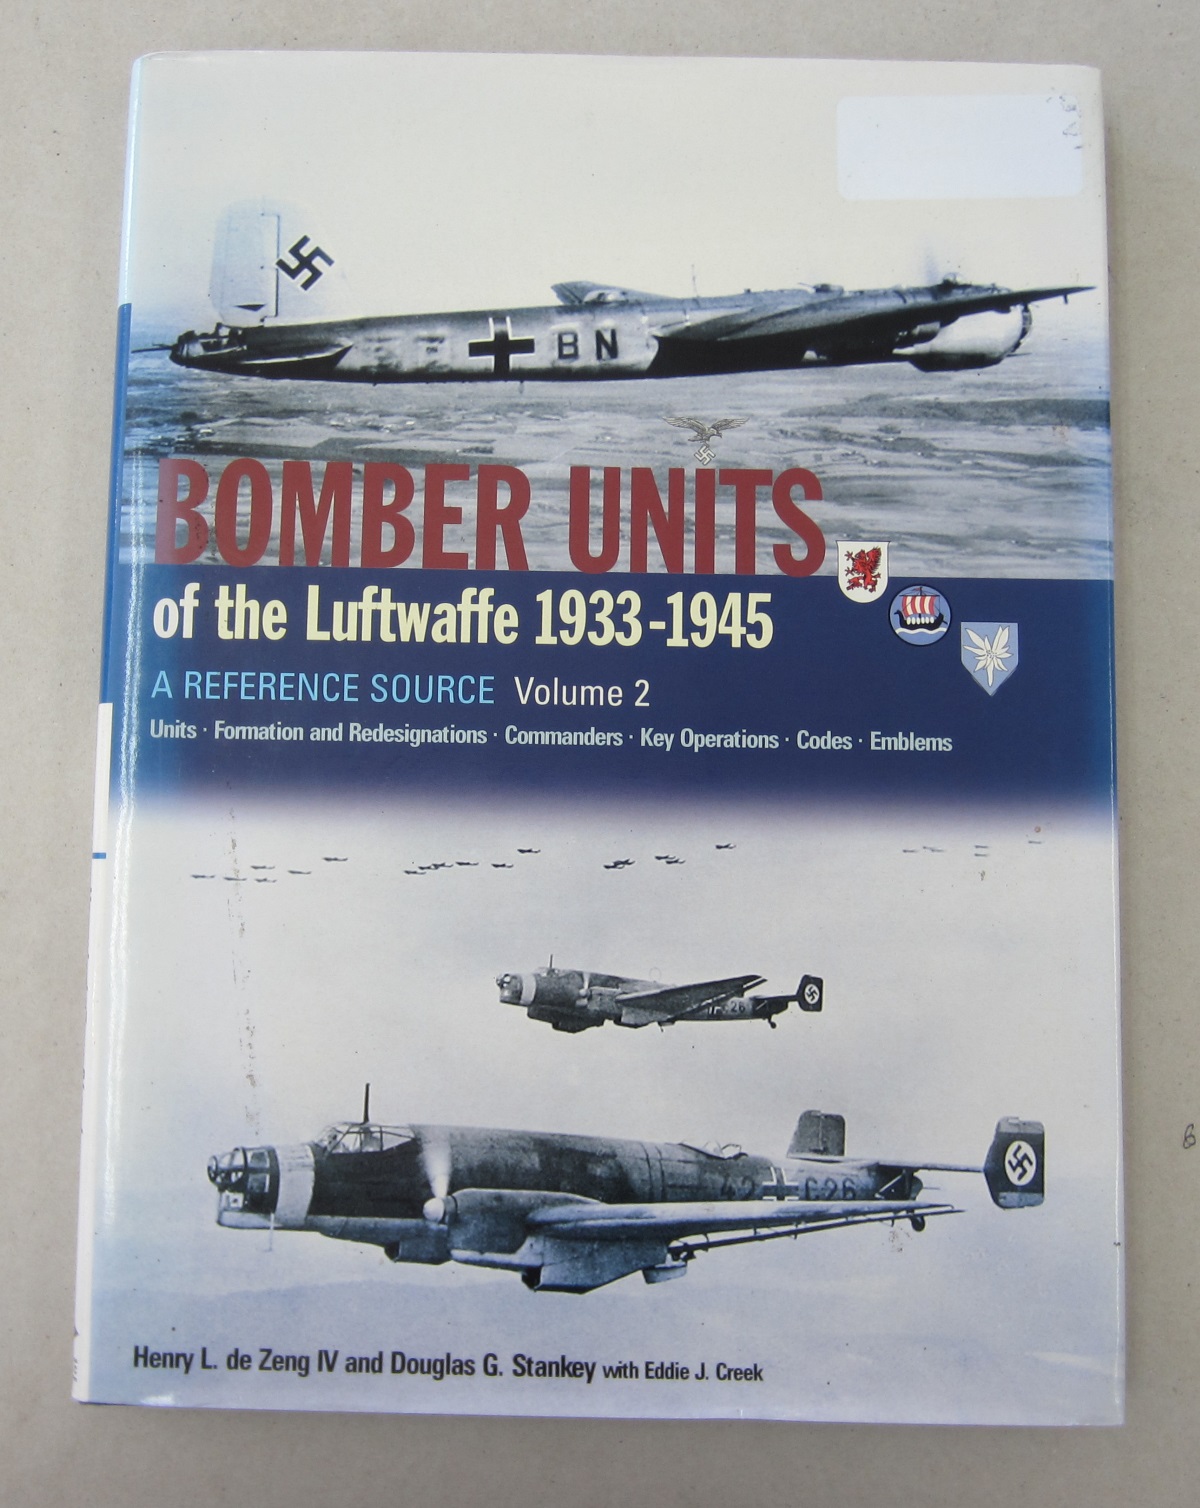 Bomber Units of the Luftwaffe 1933-1945 Volume 2: A Reference Source - Henry L. de Zeng IV, Douglas G. Stankey, Eddie J. Creek